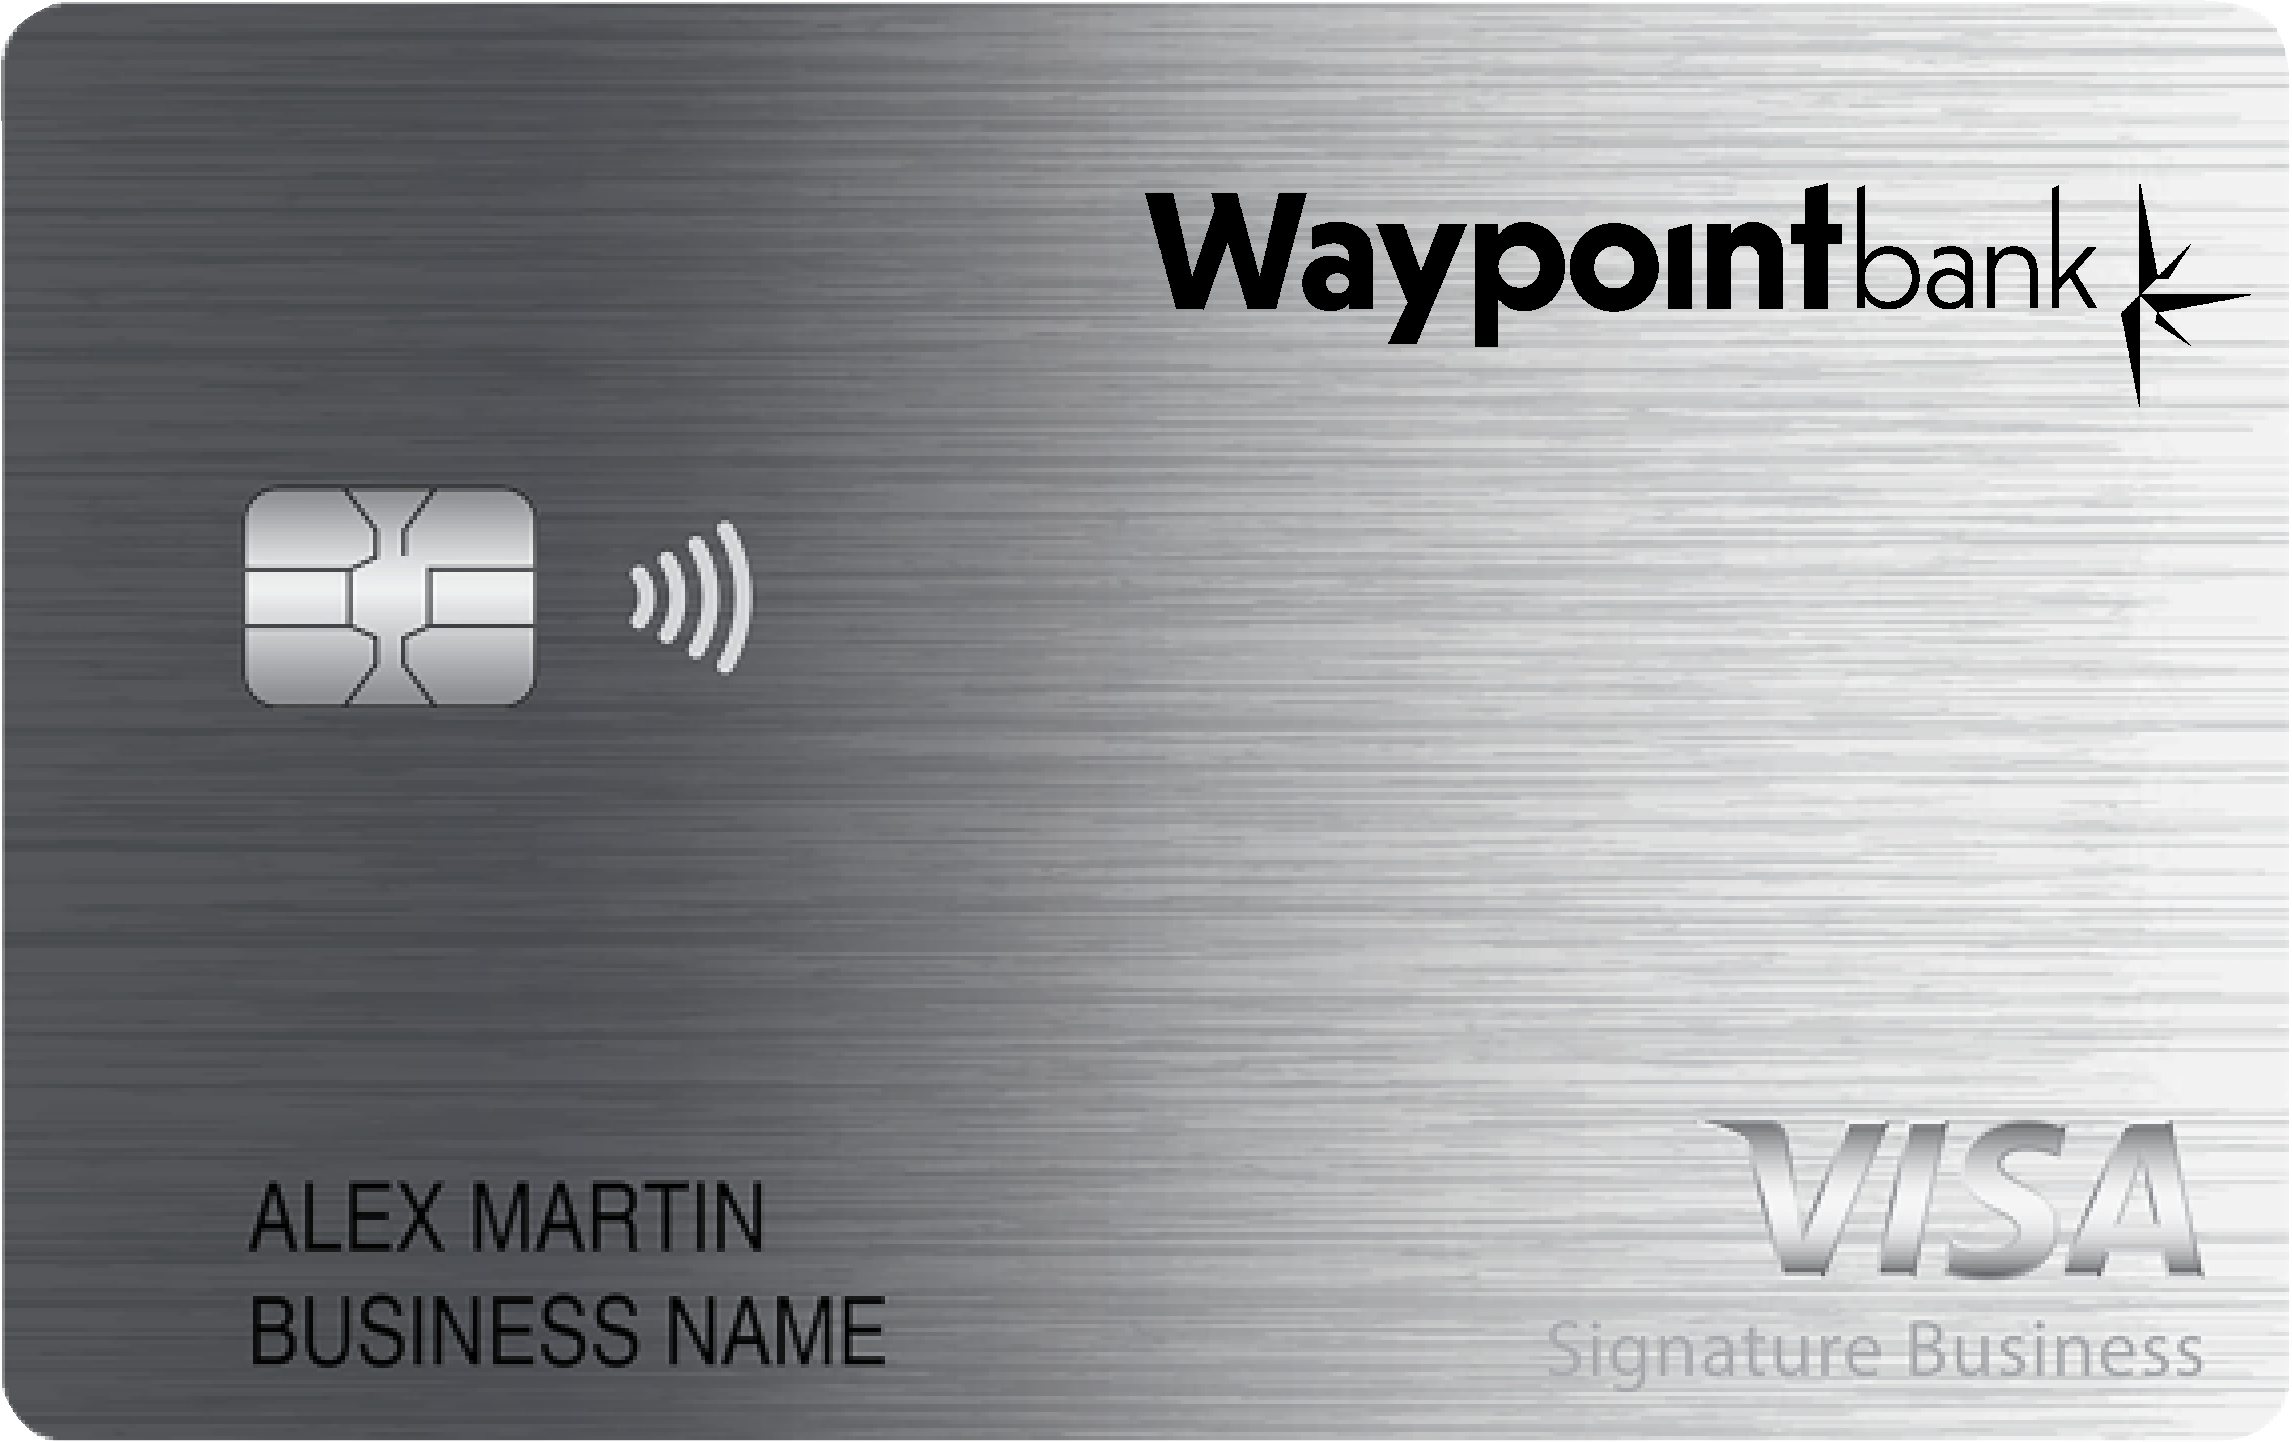 Waypoint Bank Smart Business Rewards Card